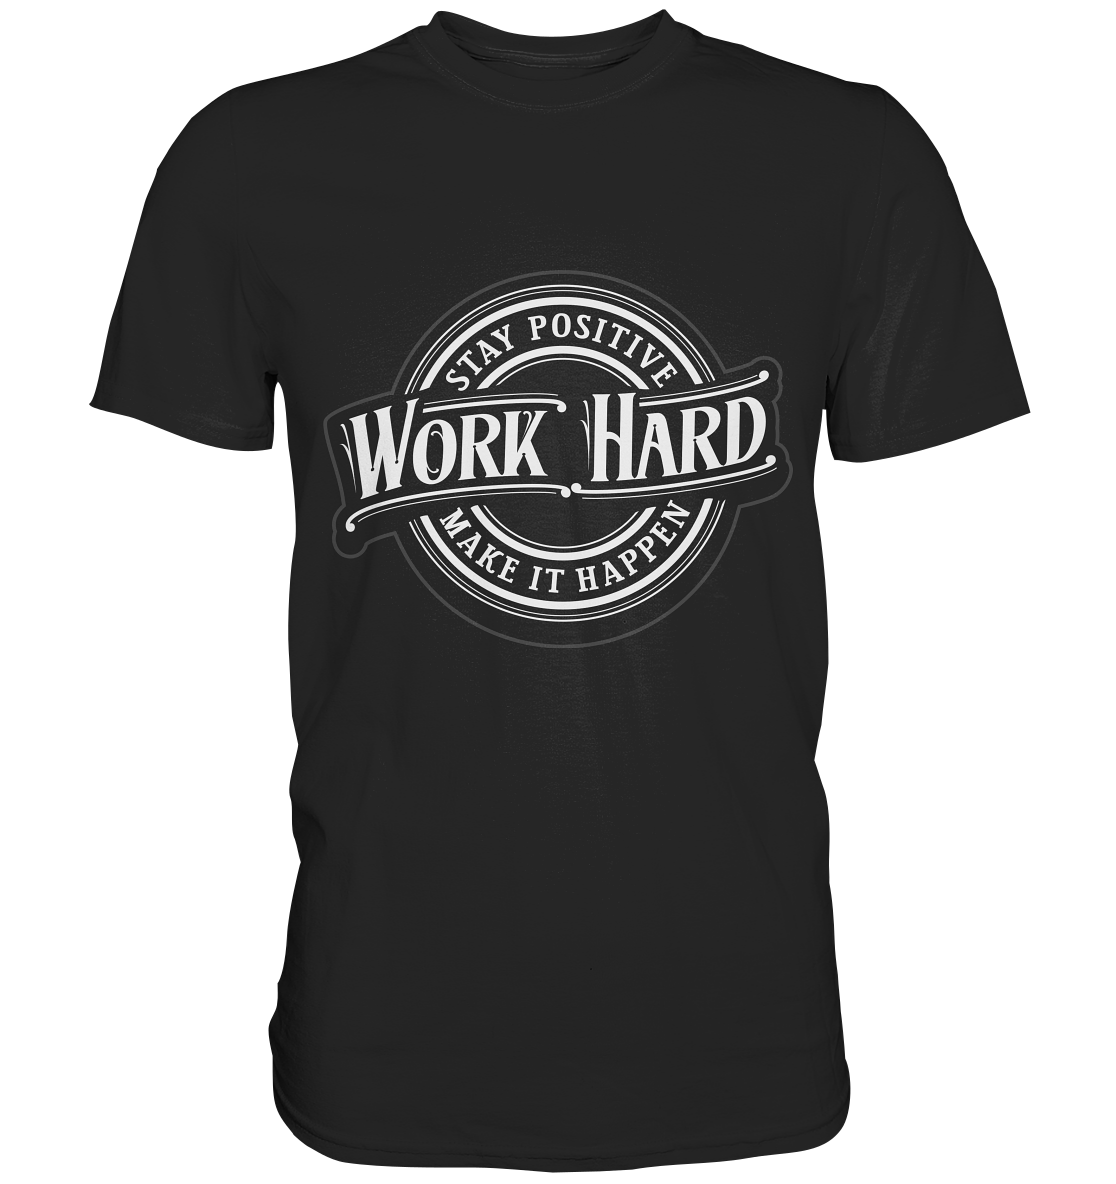 Work hard. Stay positiv. Make it happen - Premium Shirt